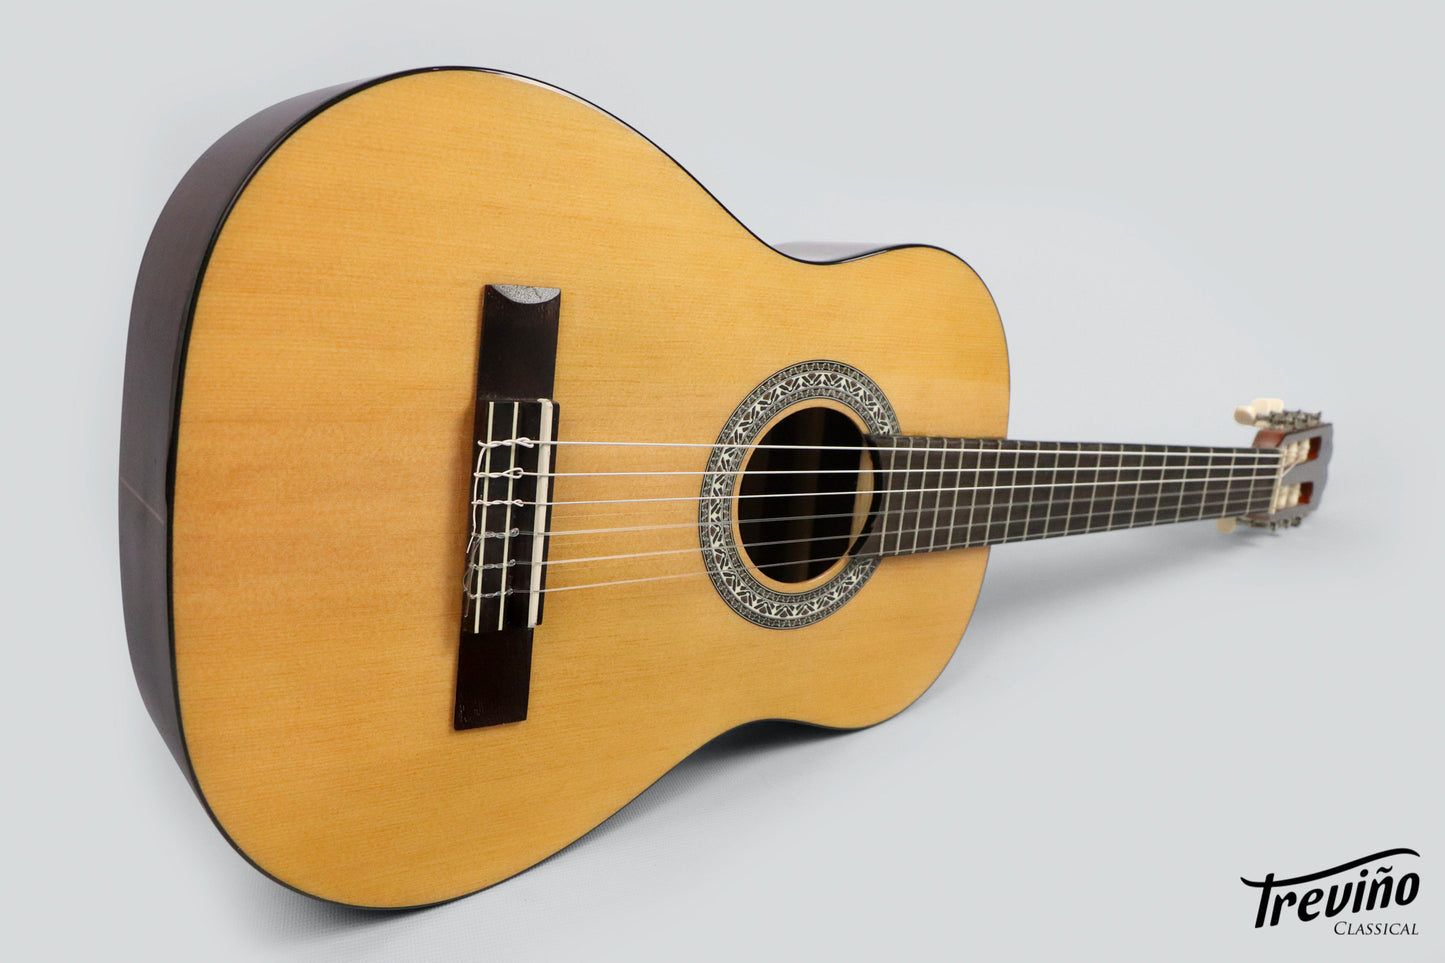 Trevino C393-55 Classical Guitar Nylon String (Natural) 1/2 Size